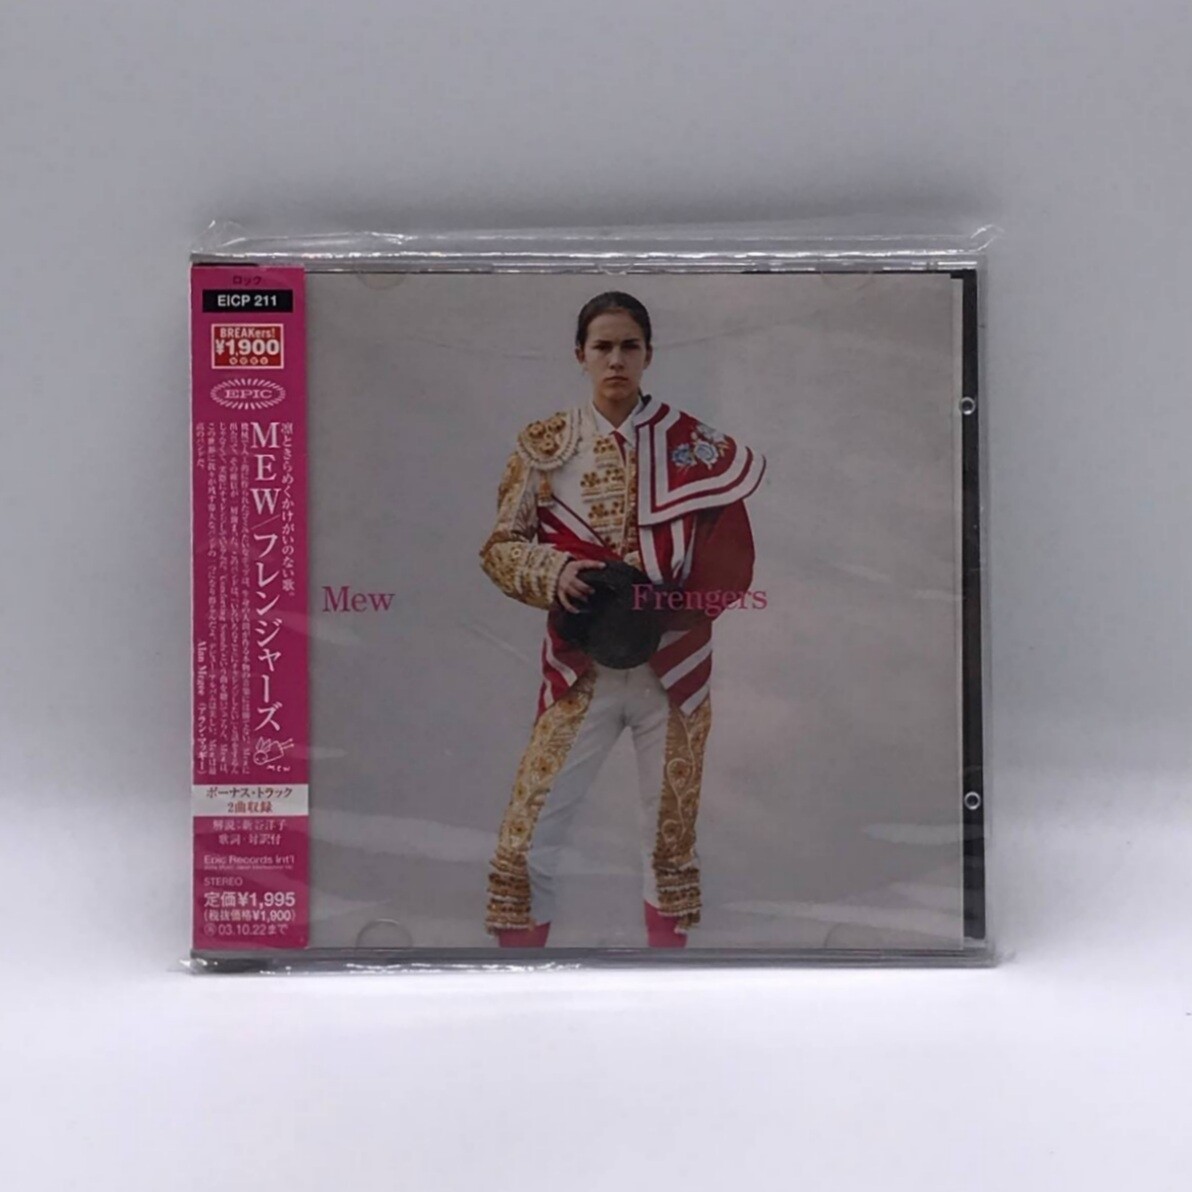 [USED] MEW -FRENGER- CD (JAPAN PRESS)